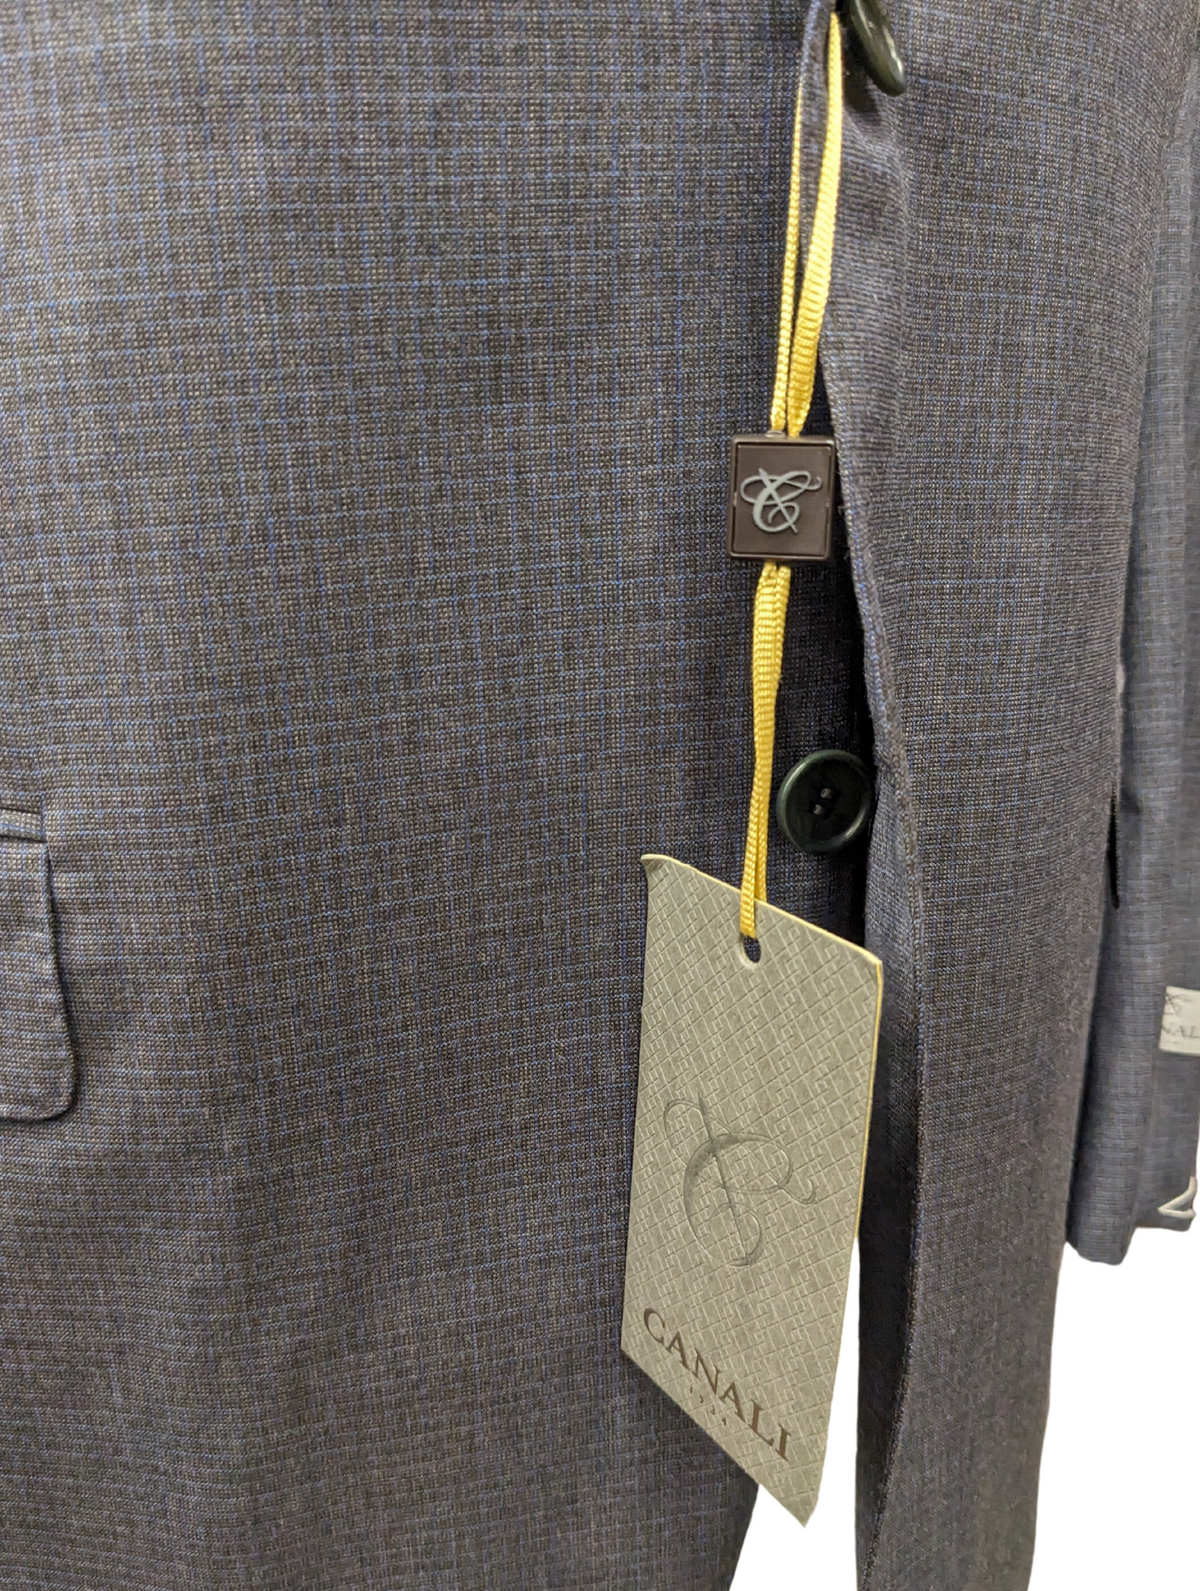 Canali 1934 Mens Gray Check 44L Drop 7 100% Wool 2 Button 2 Piece Suit